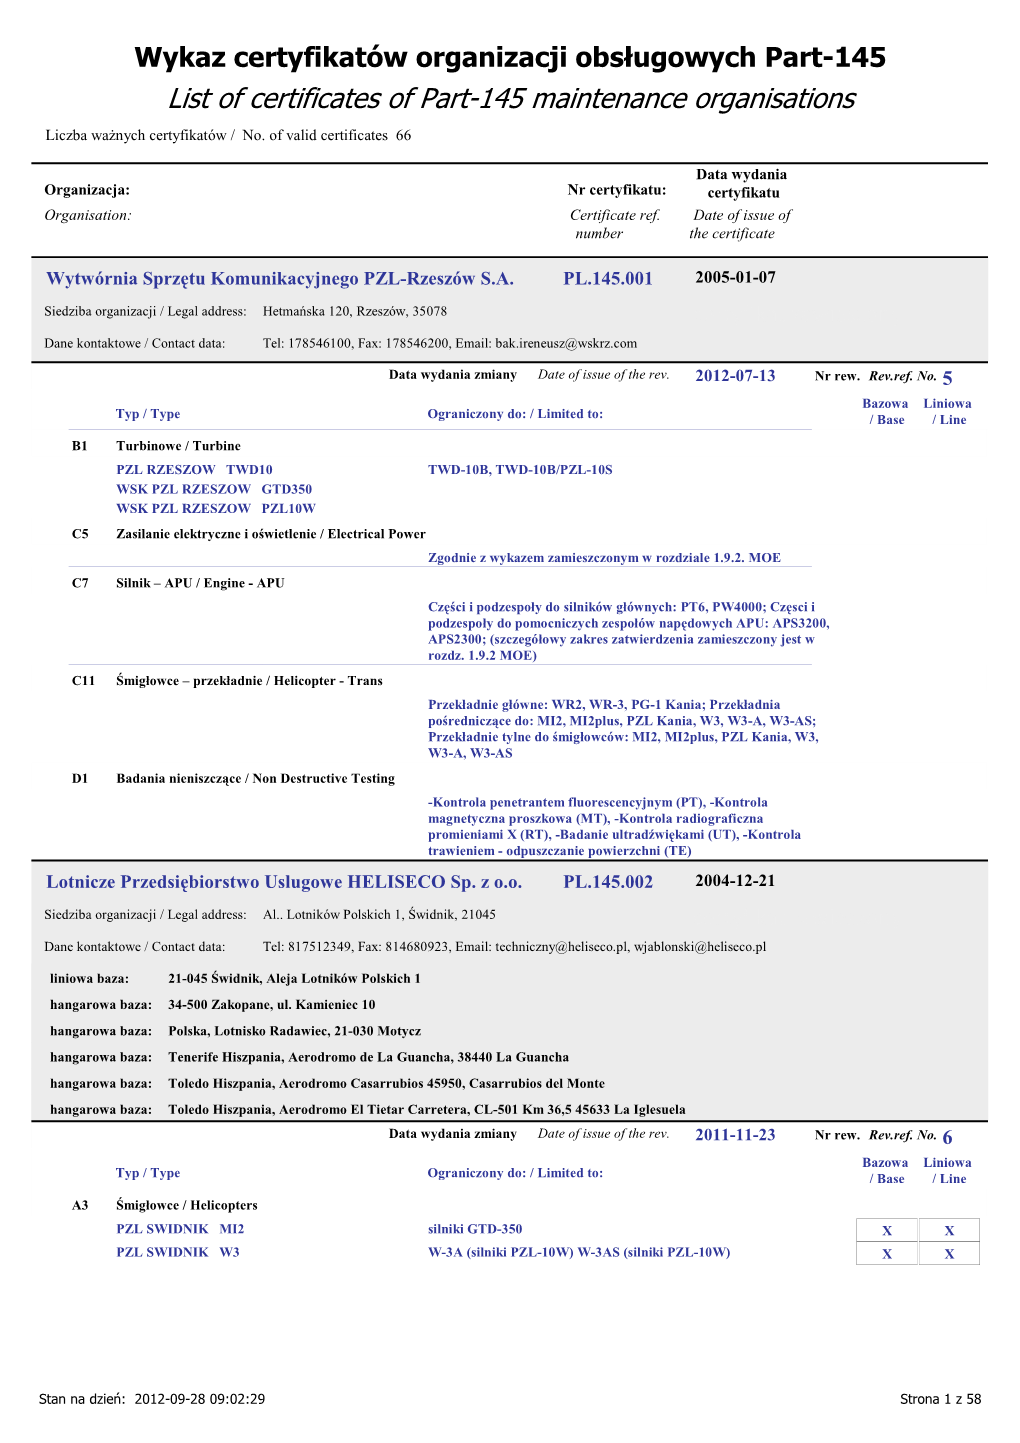 List of Certificates of Part-145 Maintenance Organisations